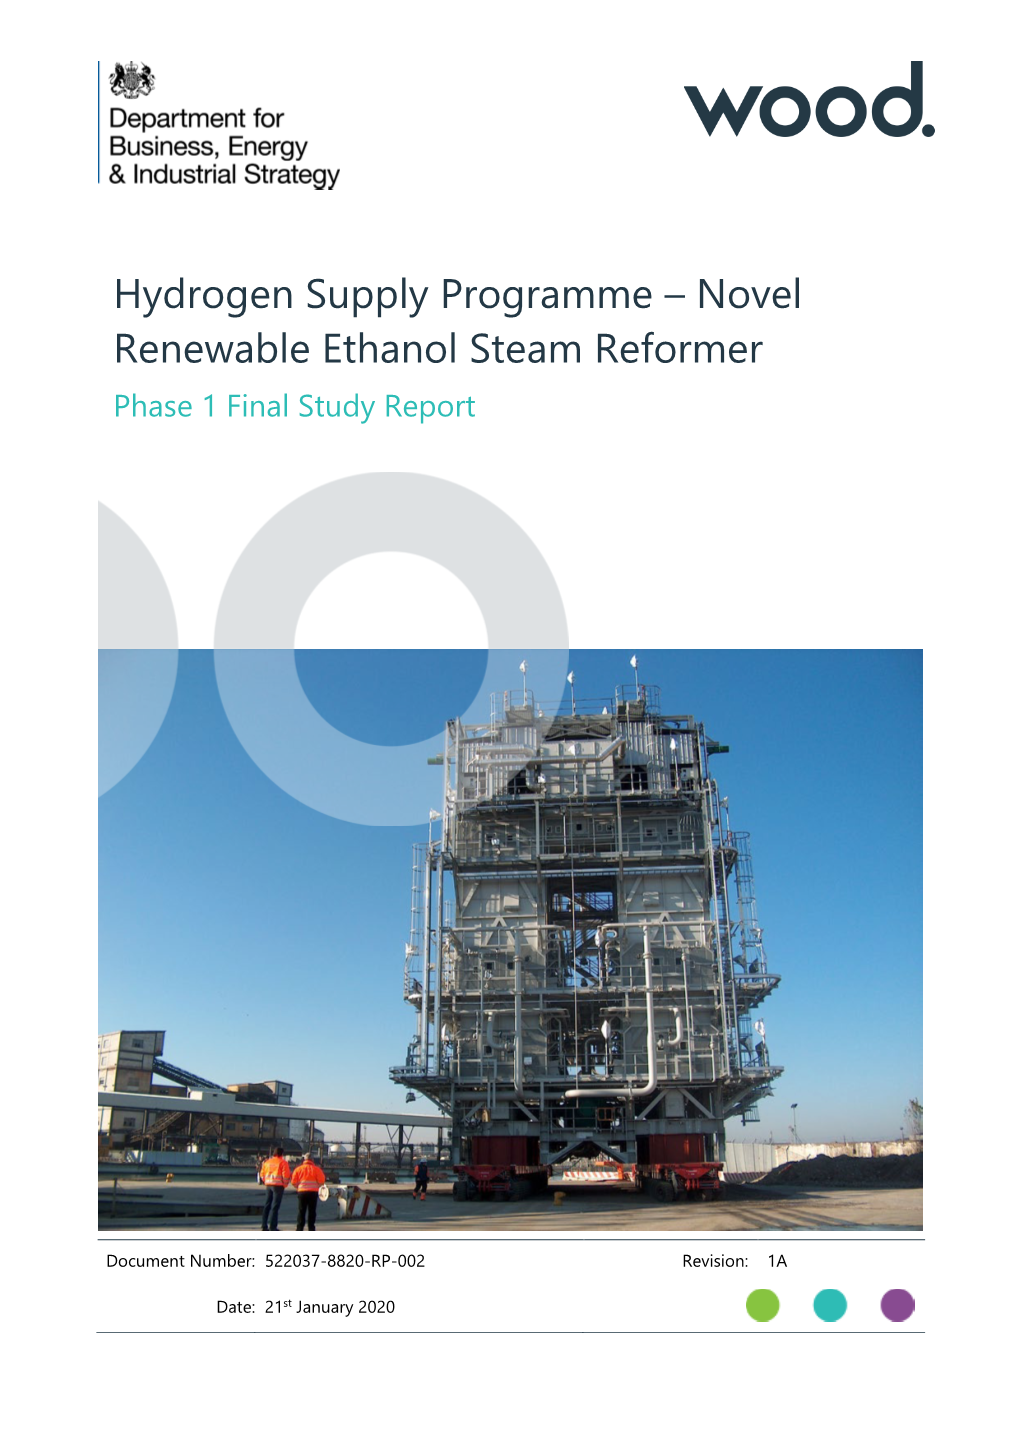 Hydrogen Supply Programme – Novel Renewable Ethanol Steam Reformer: Phase 1 Final Study Report